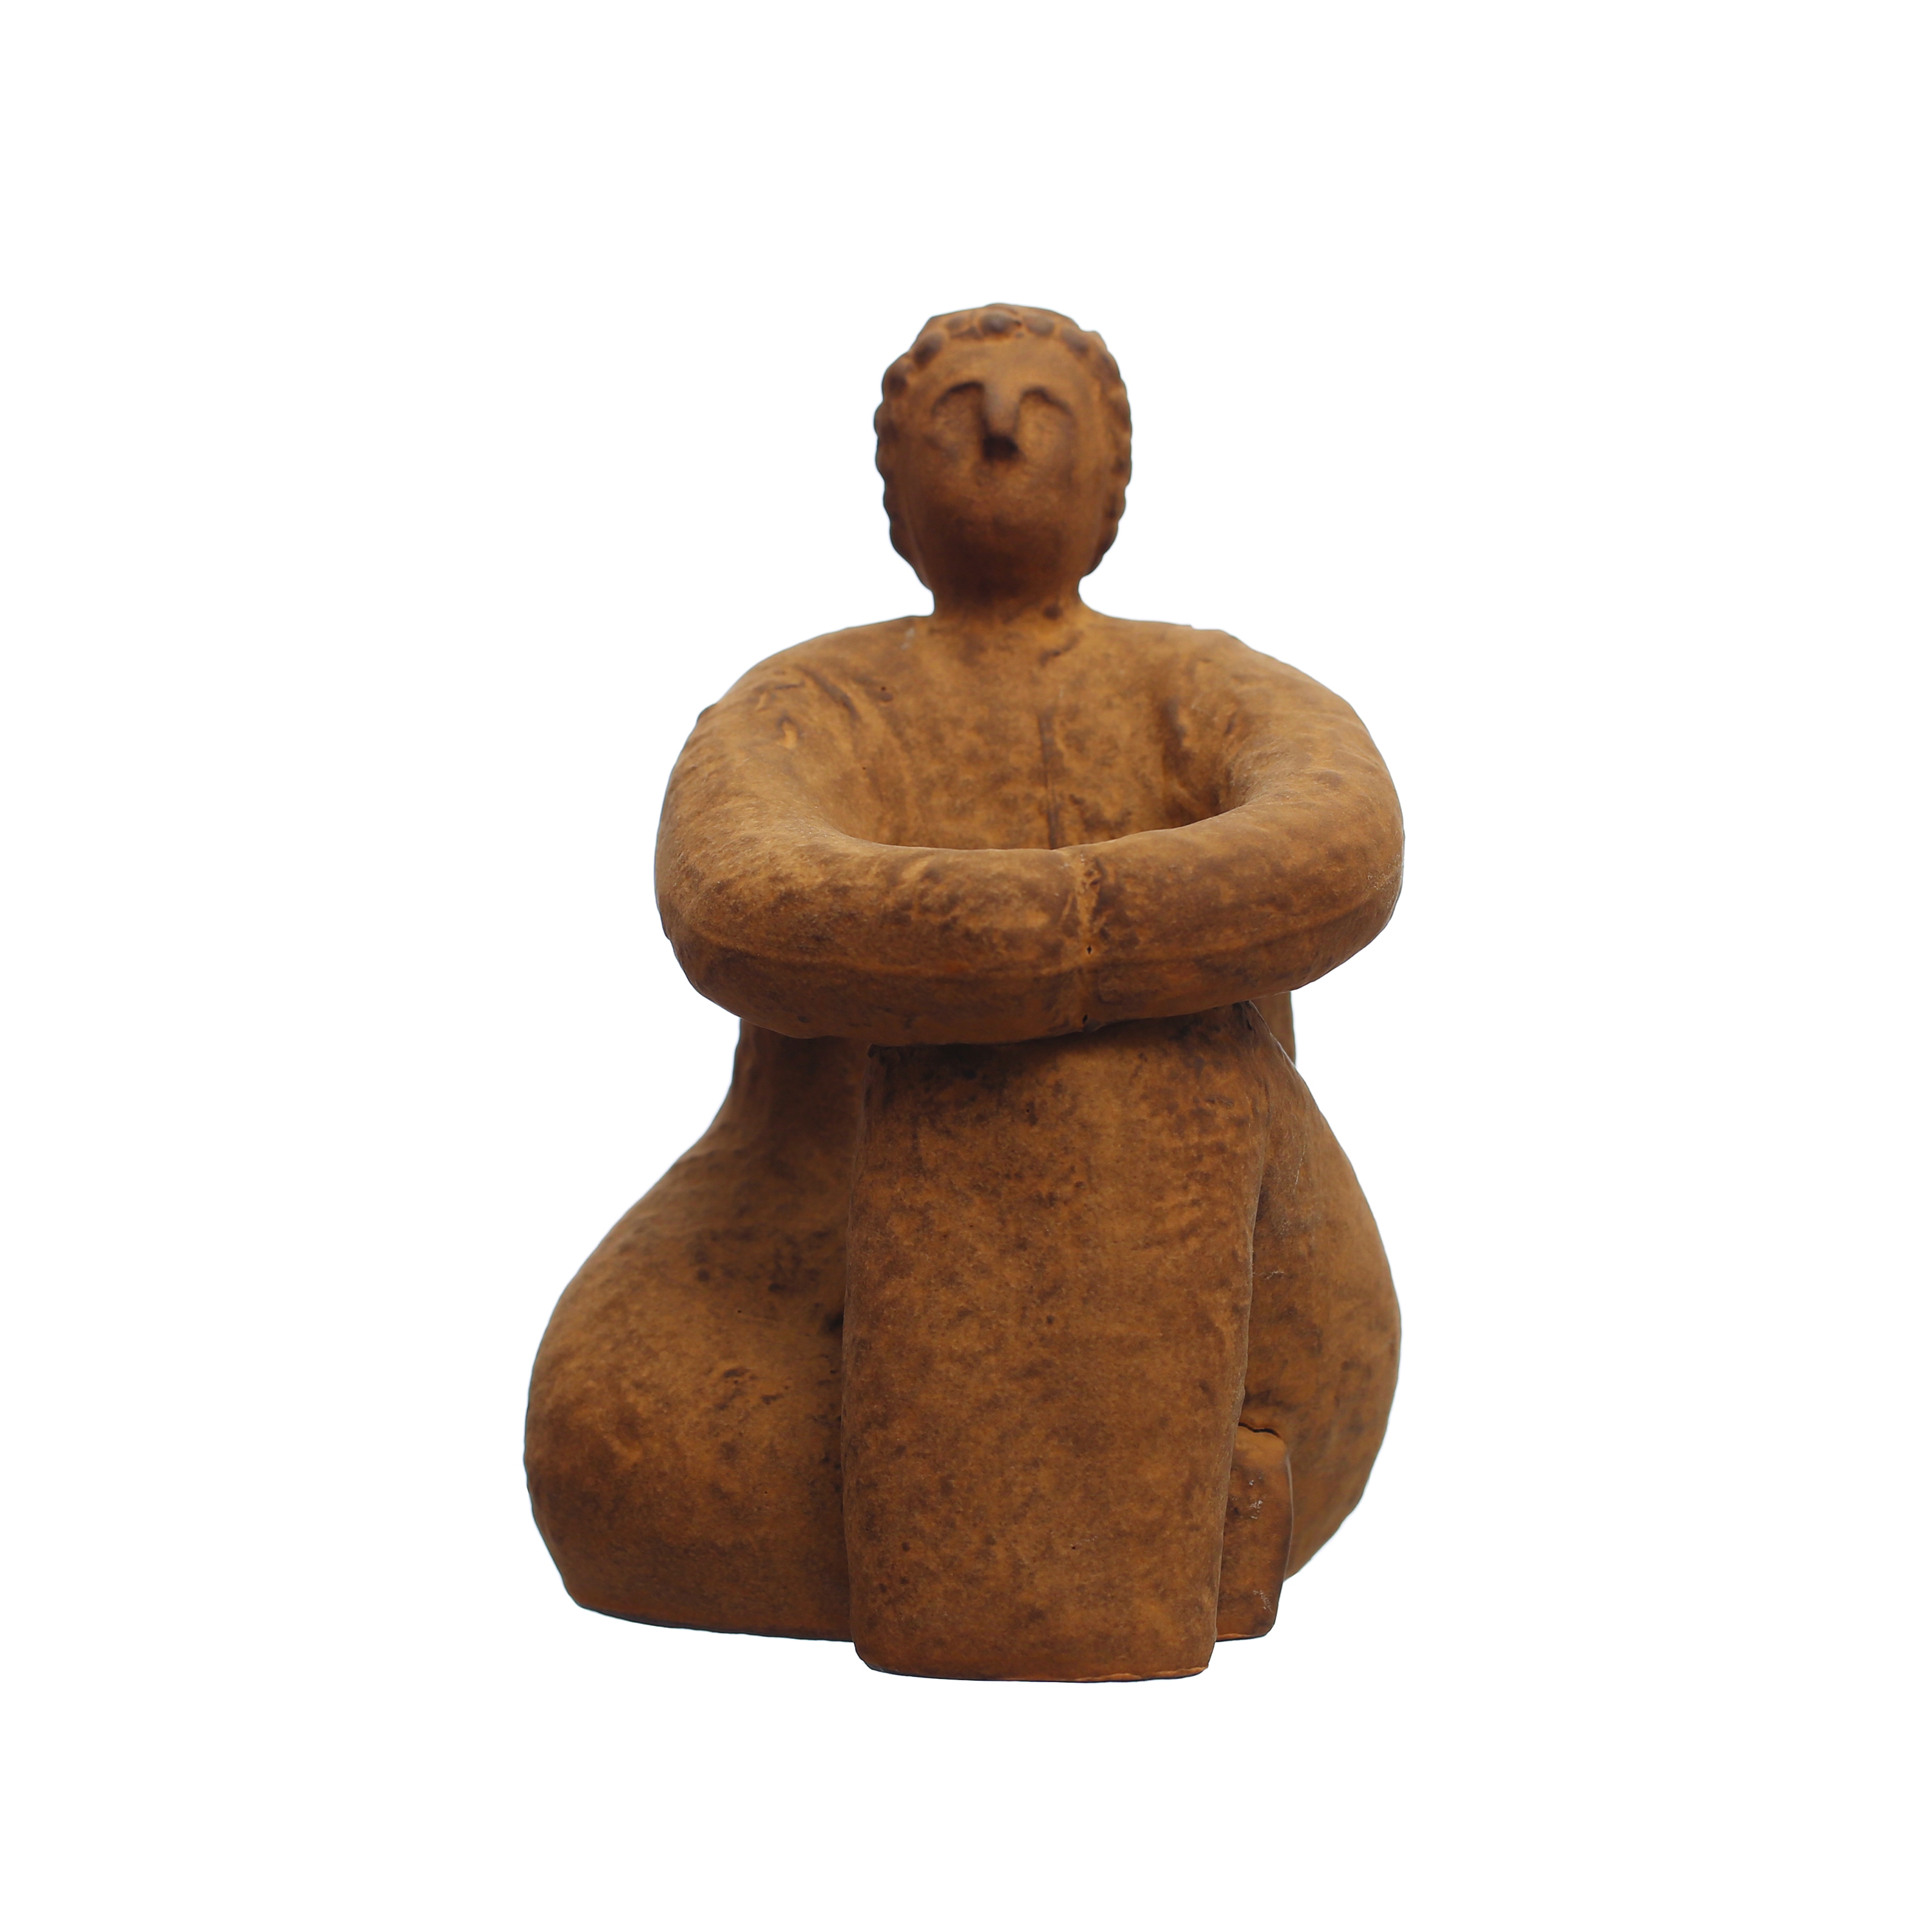 Decorative Sitting Woman Figurine Stoneware Sculpture with Reactive Glaze, Matte Terra-cotta - Image 0